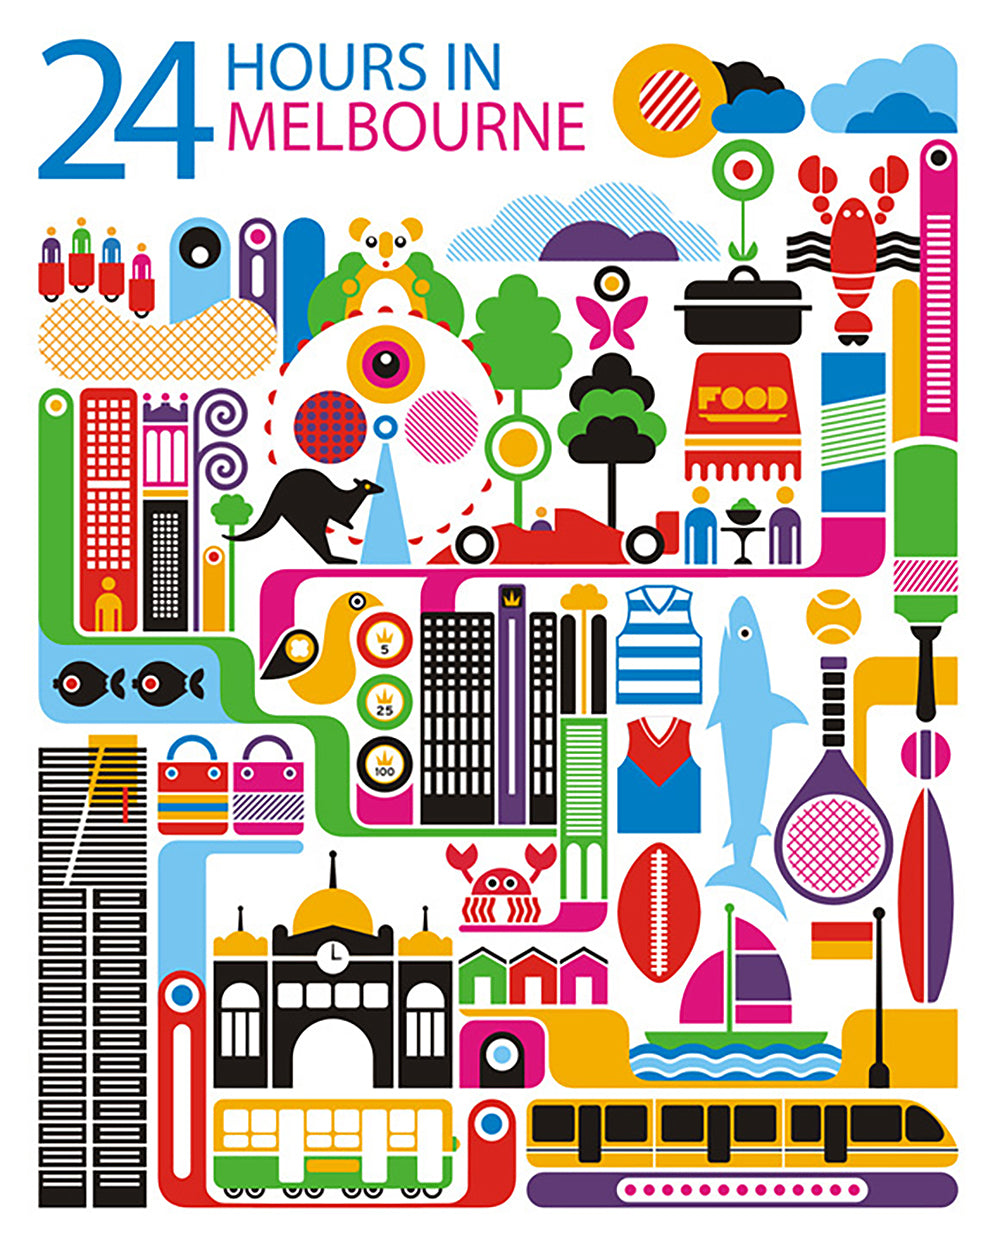 Safari Journal / Blog by Safari Fusion | 24 hours in Melbourne | Modern travel posters by graphic designer Fernando Volken Togni